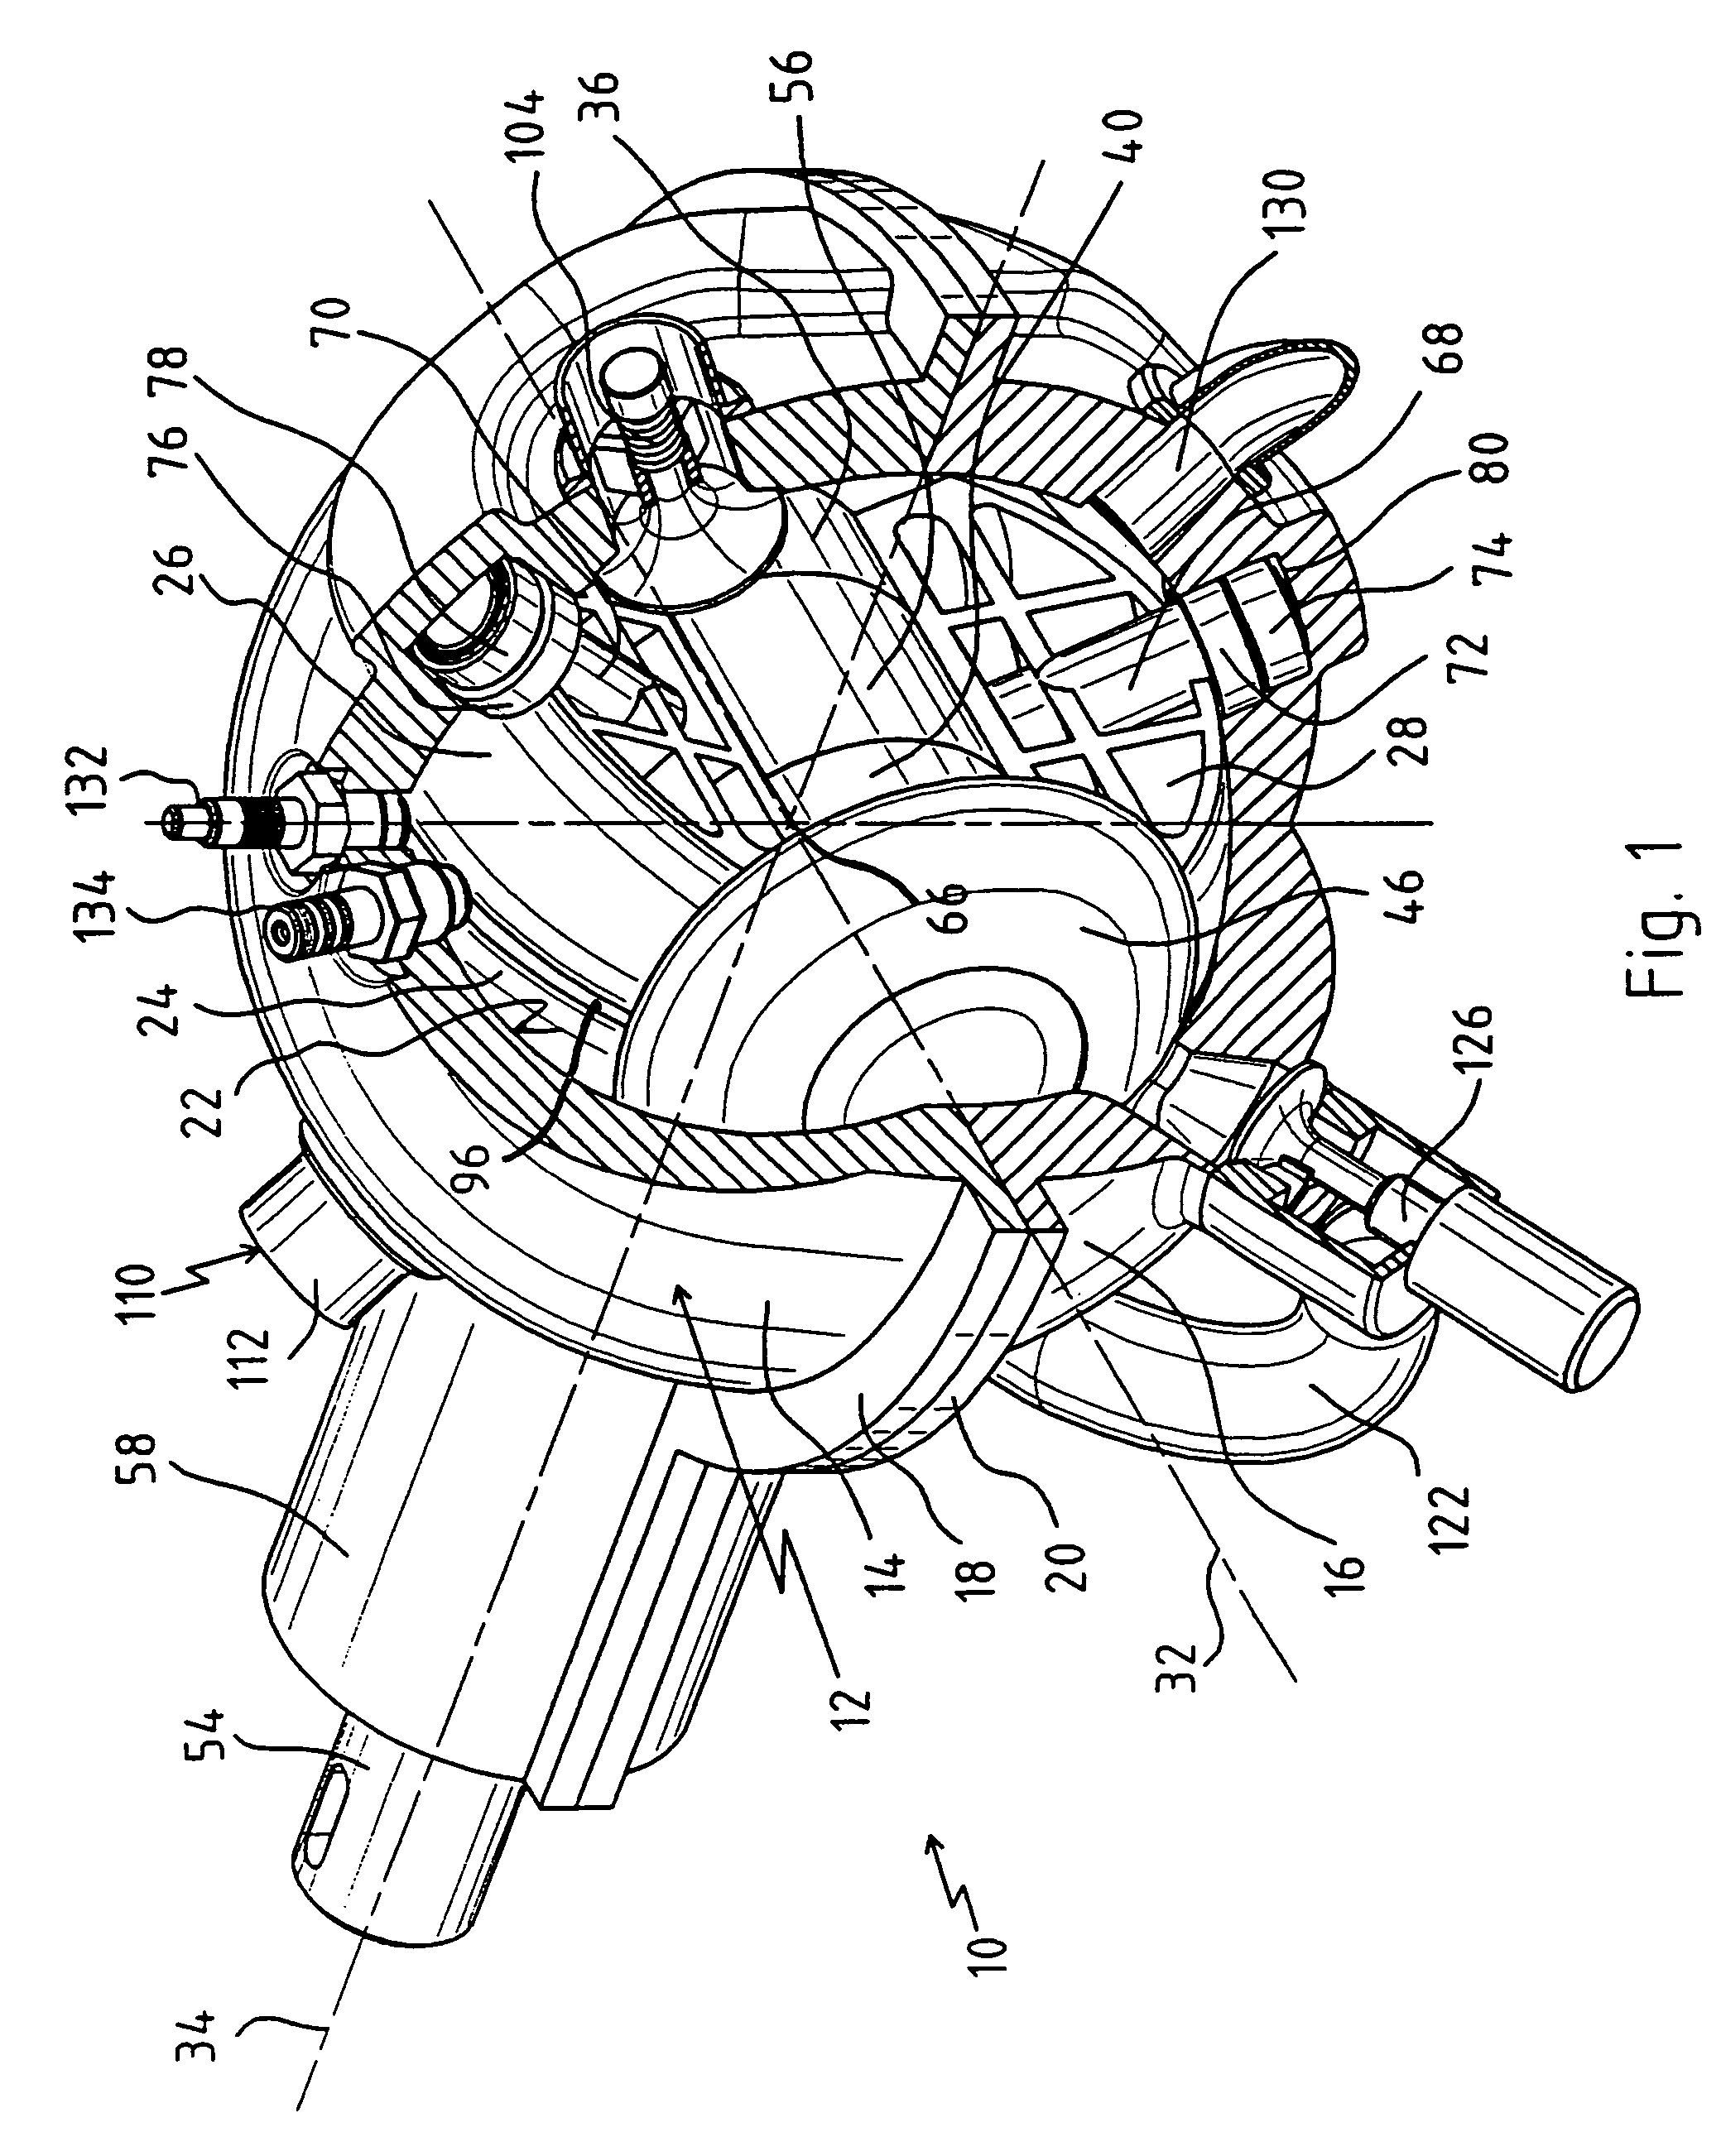 Oscillating piston machine